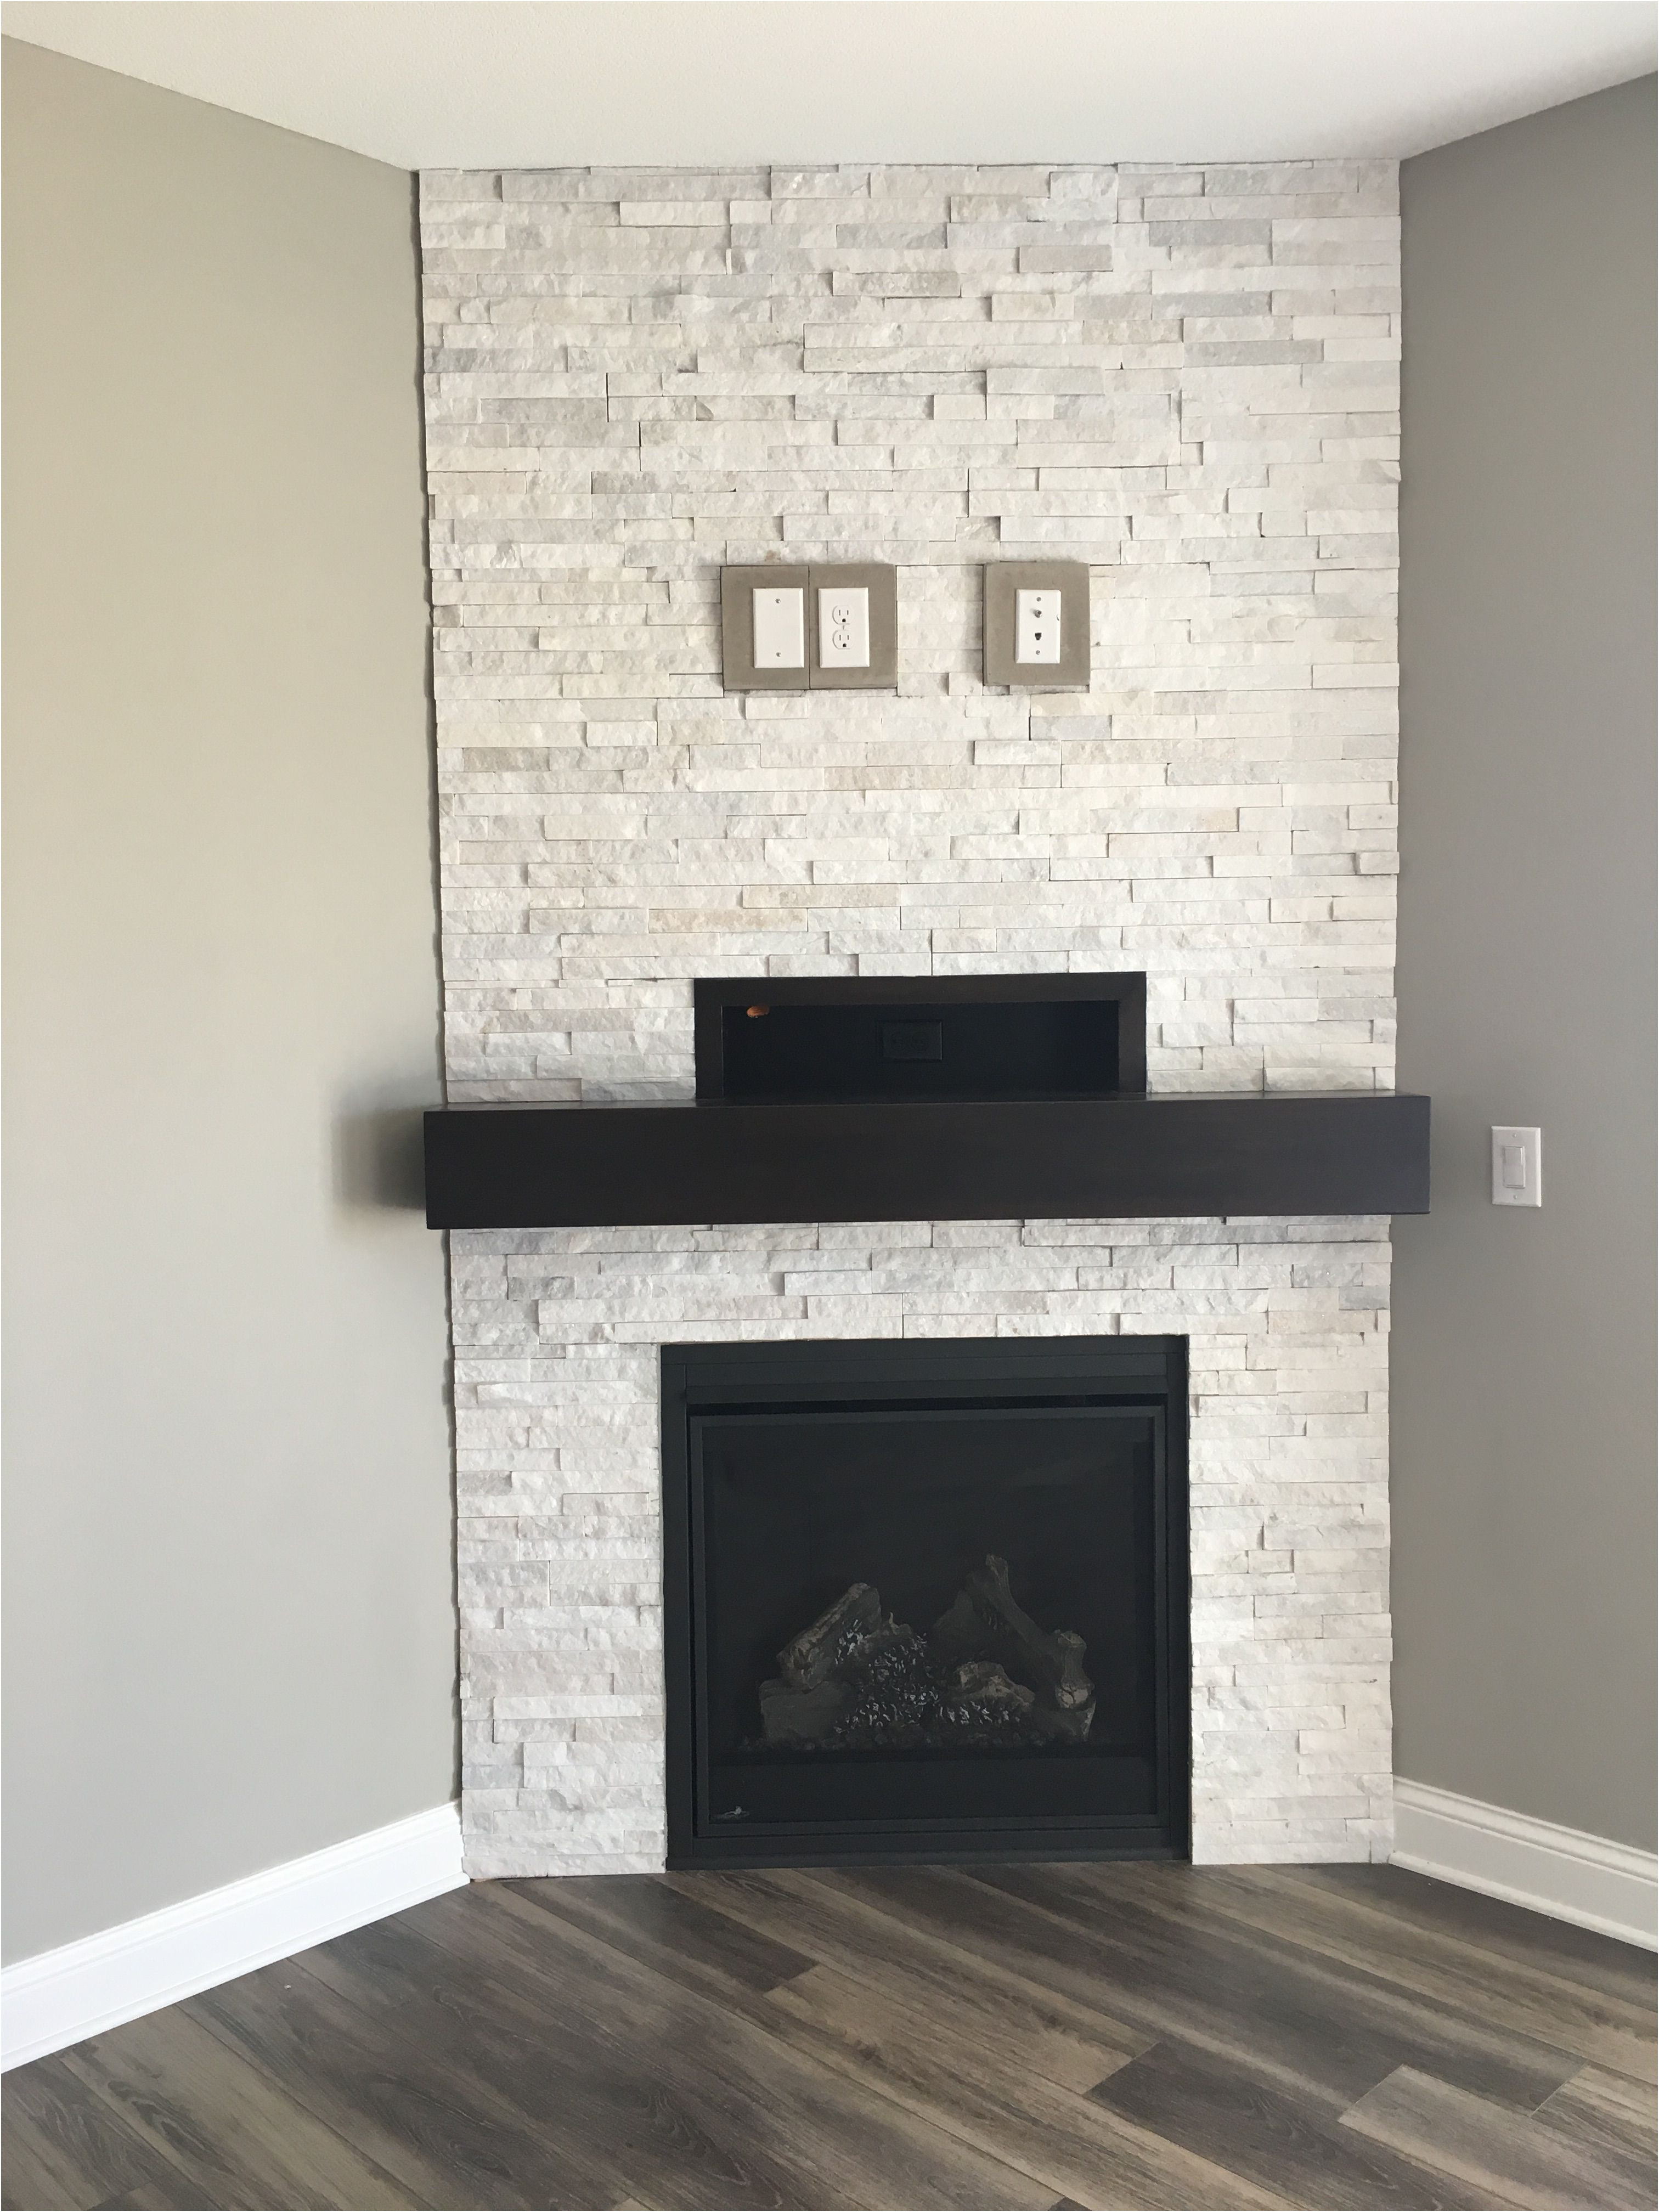 Fresh Design for Fireplace Mantel